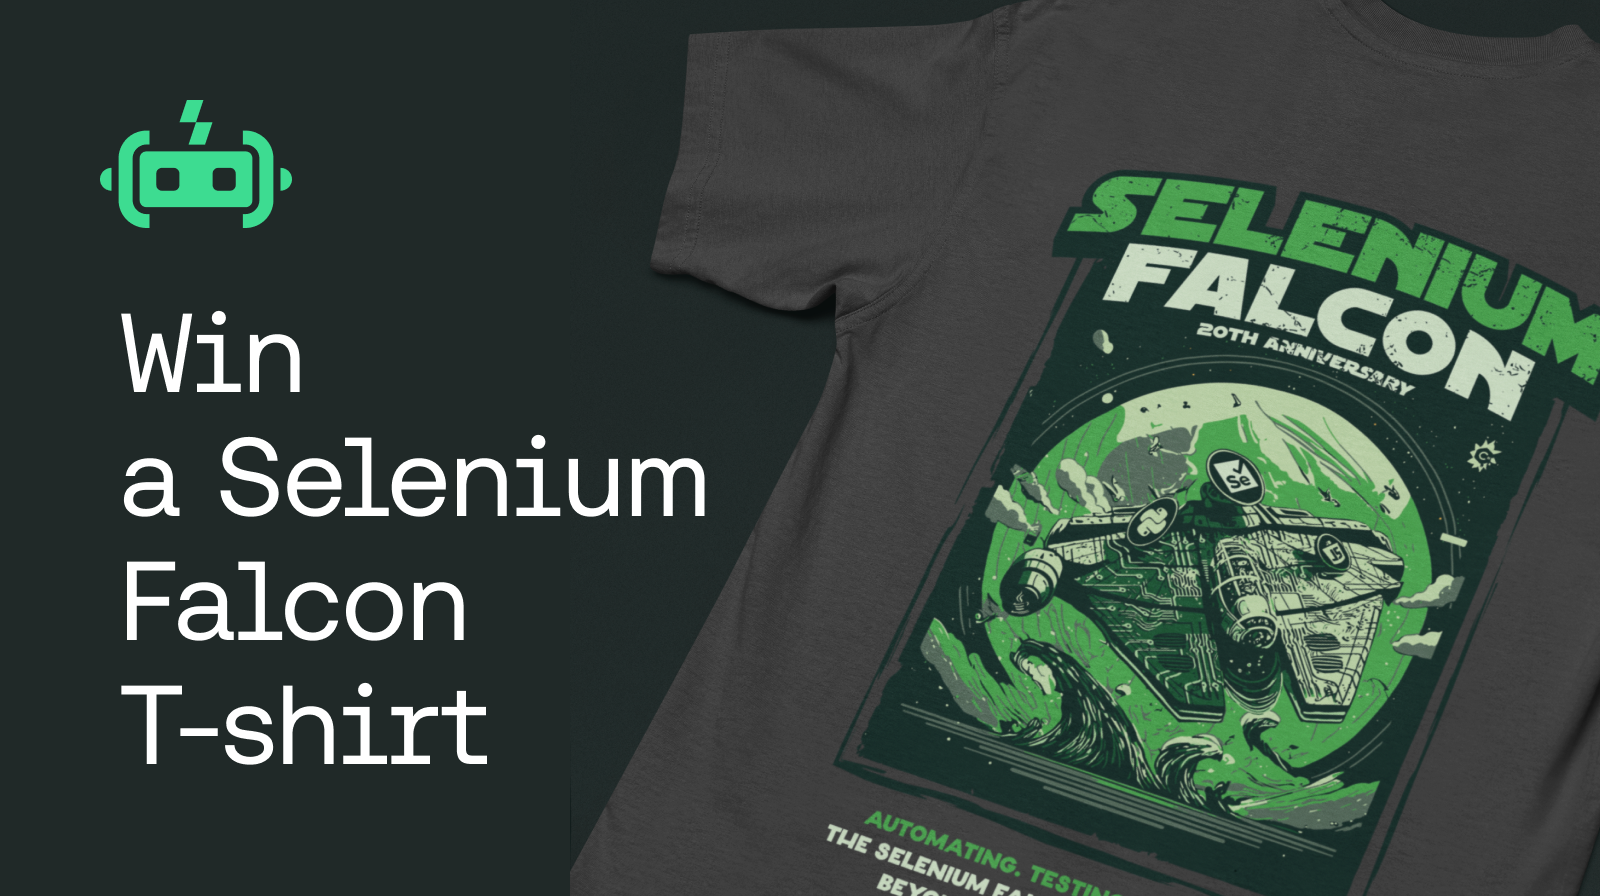 Promotion for Selenium Falcon T-shirt to celebrate Selenium's 20th anniversary. 